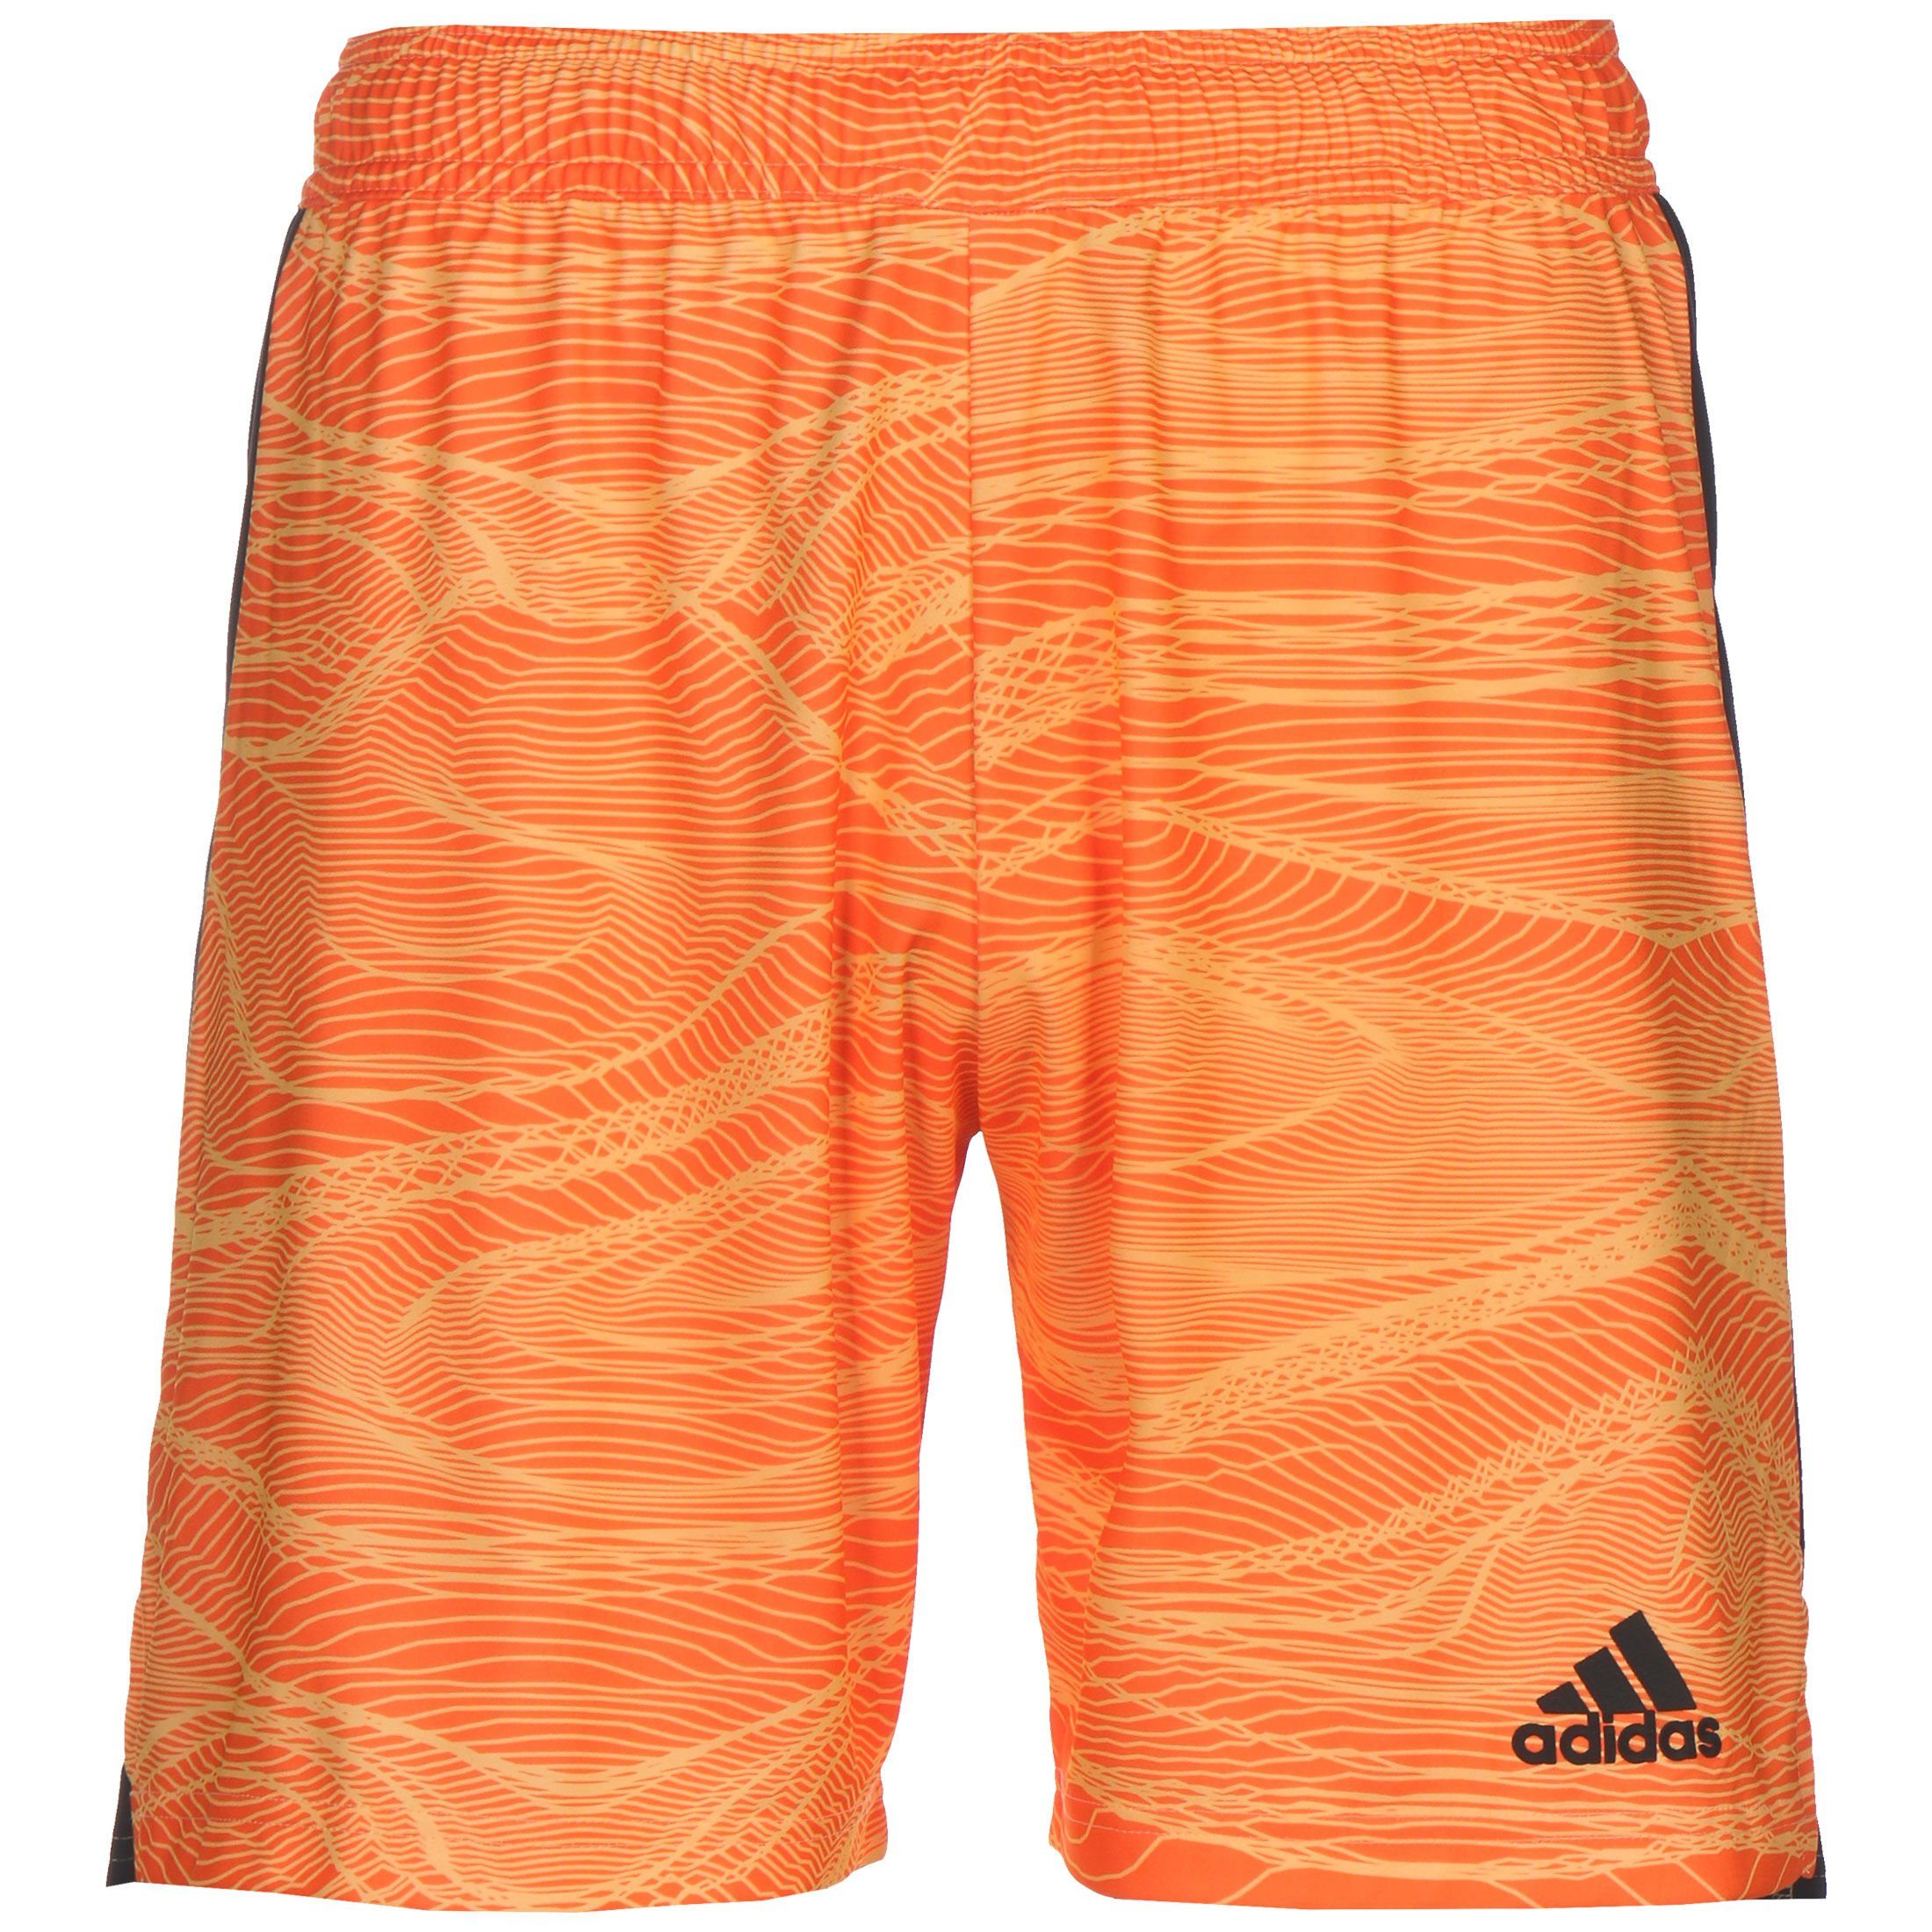 21 Shorts Performance Herren Goalkeeper Condivo adidas orange Torwarthose